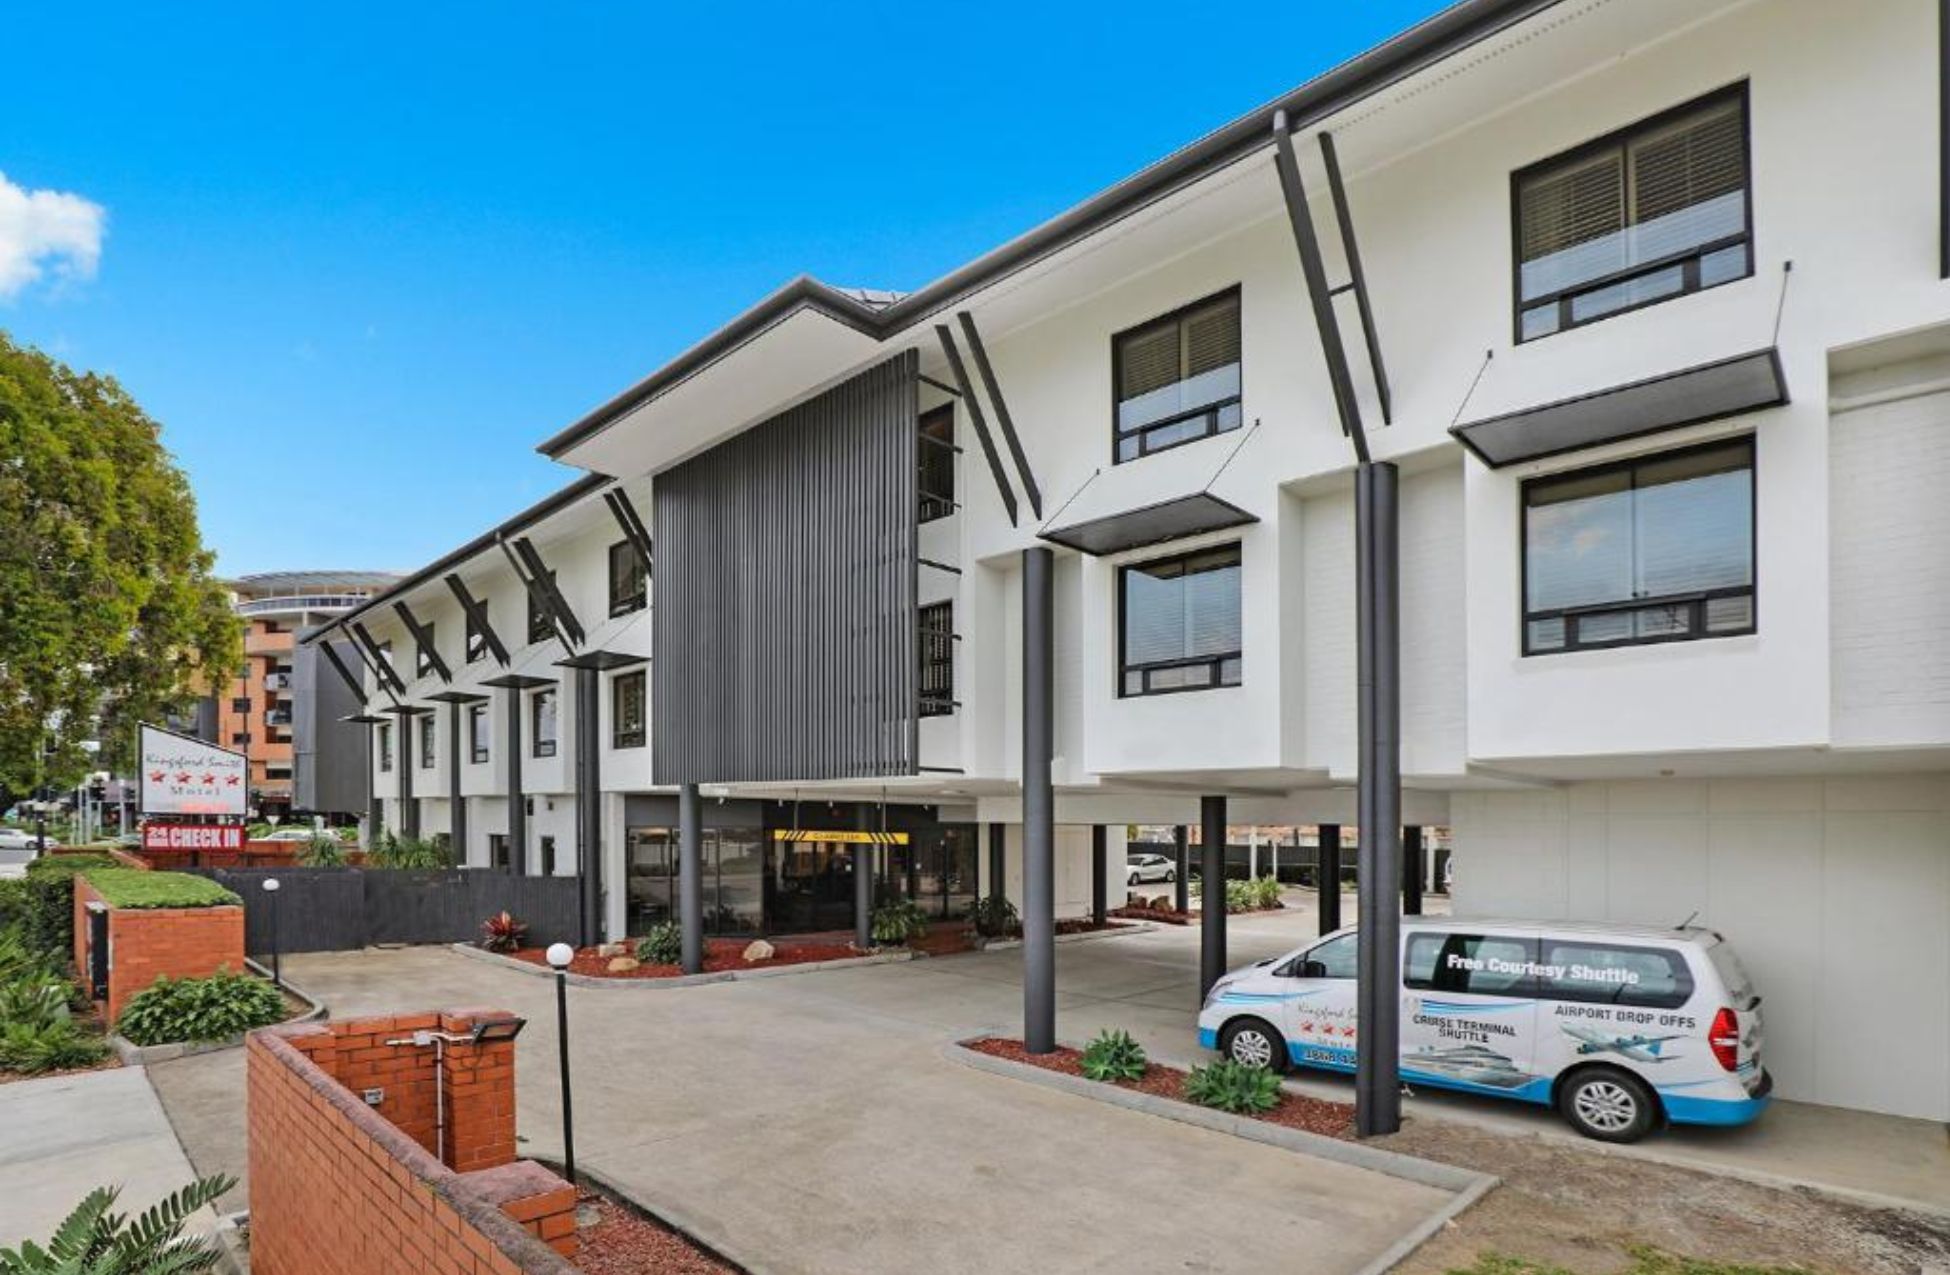 Kingsford Smith Motel - Best Hotels In Brisbane